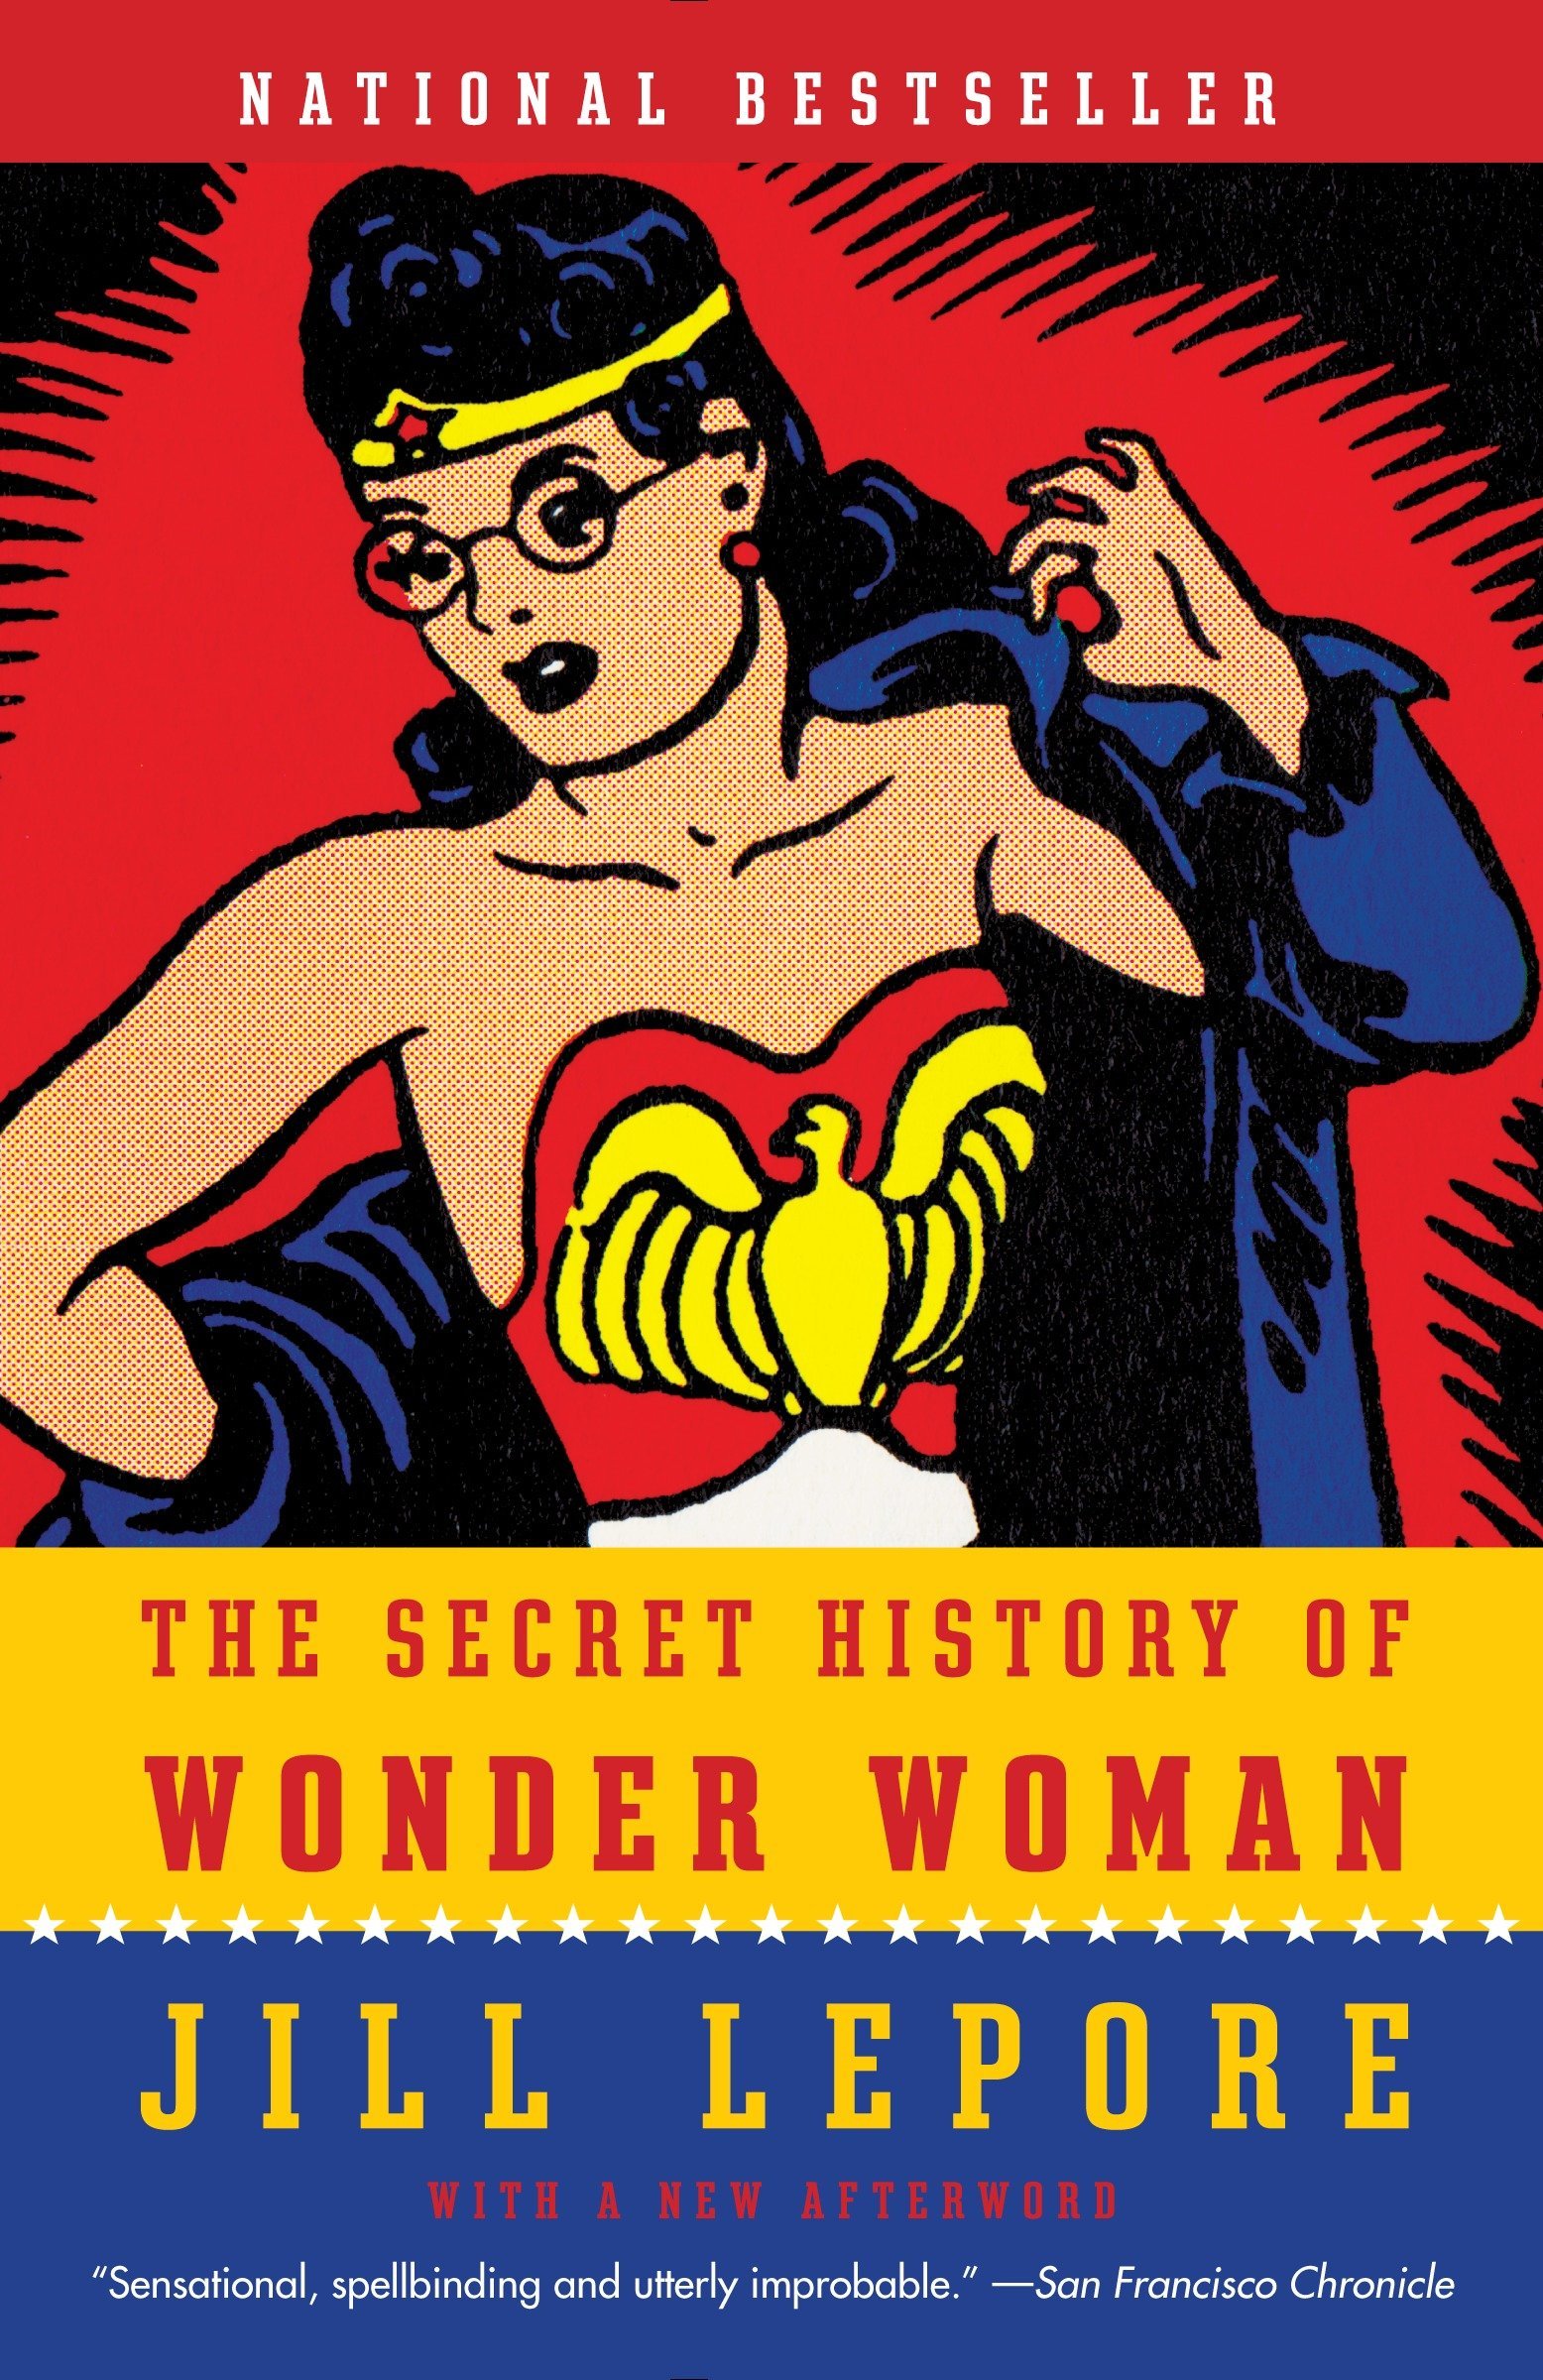 The Secret History of Wonder Woman Jill Lepore 2015